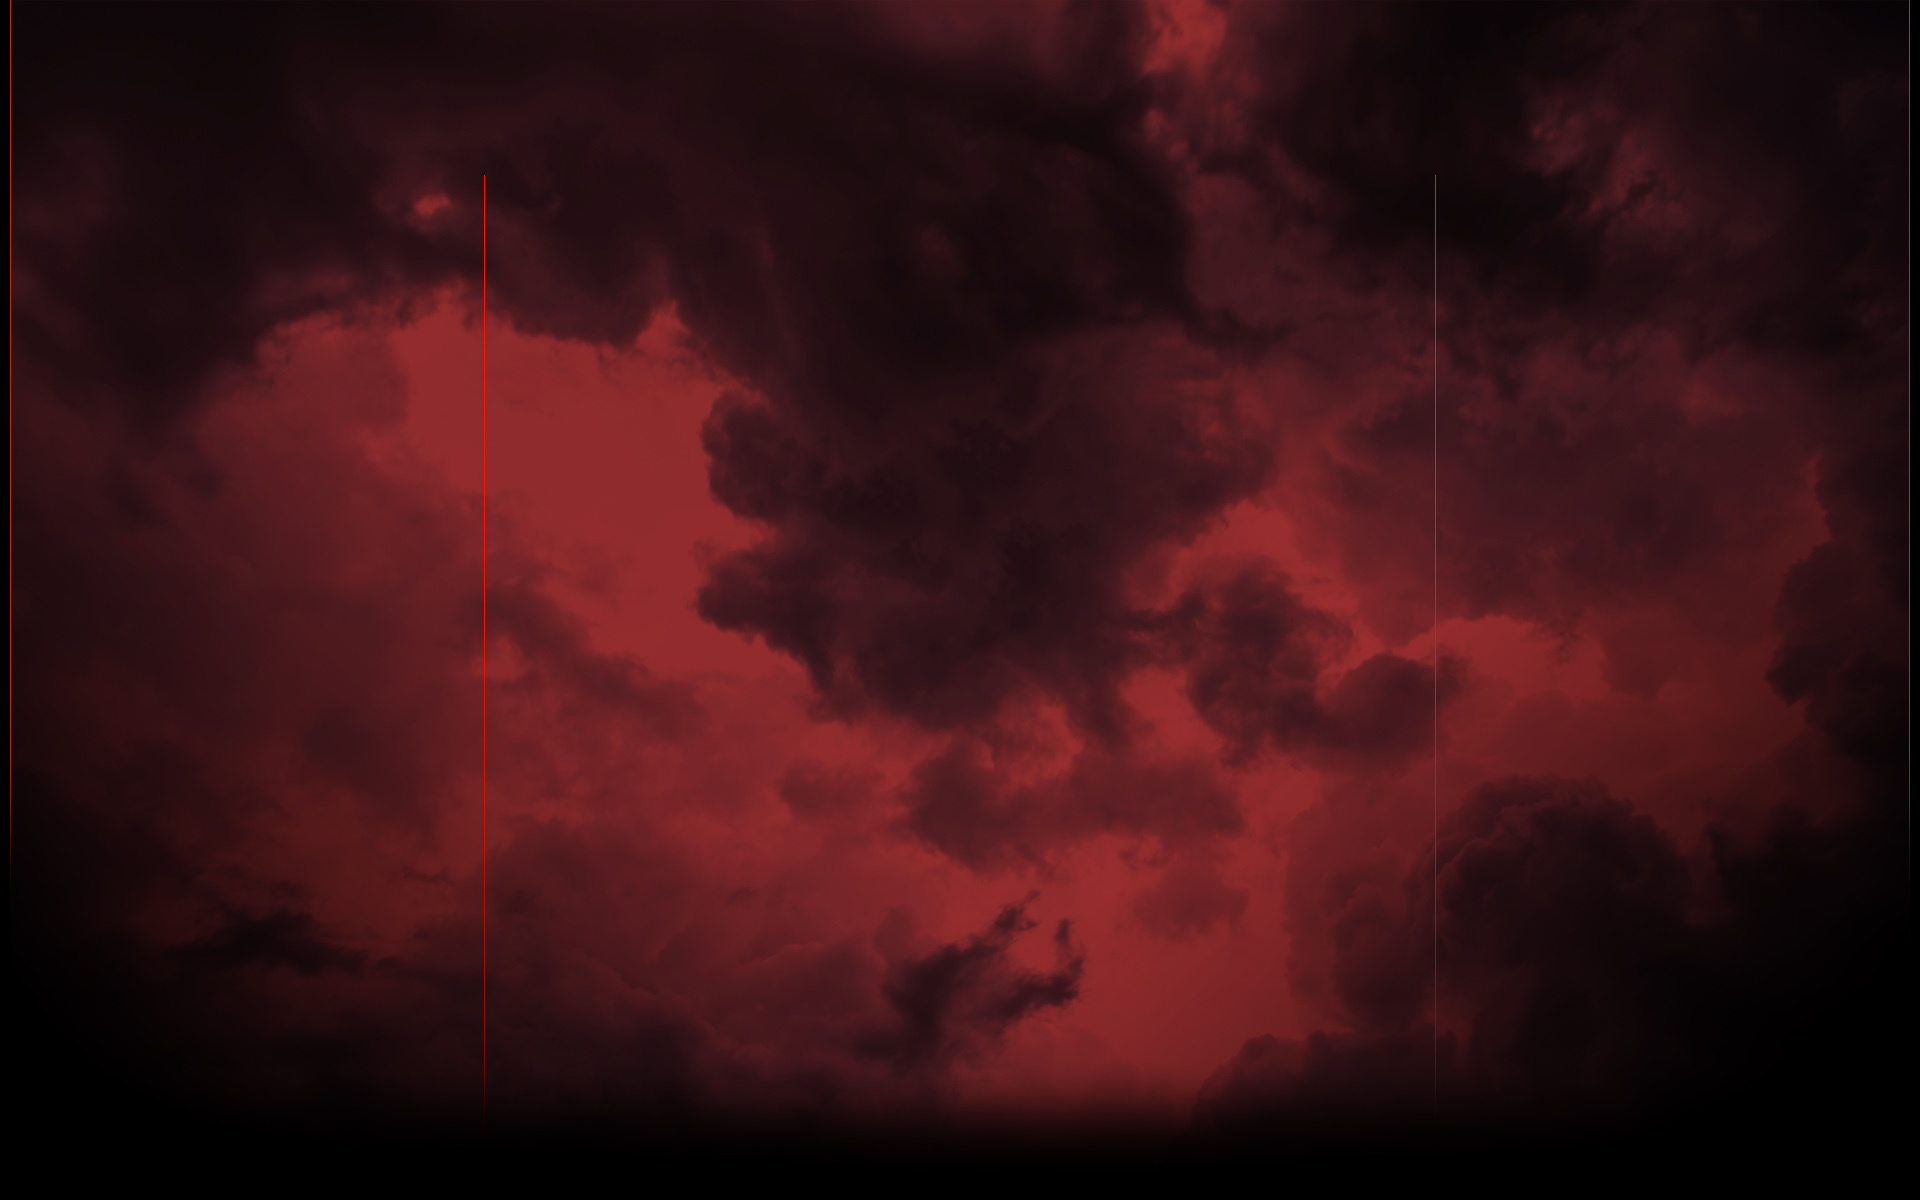 Red clouds иллюстрации стим фото 2